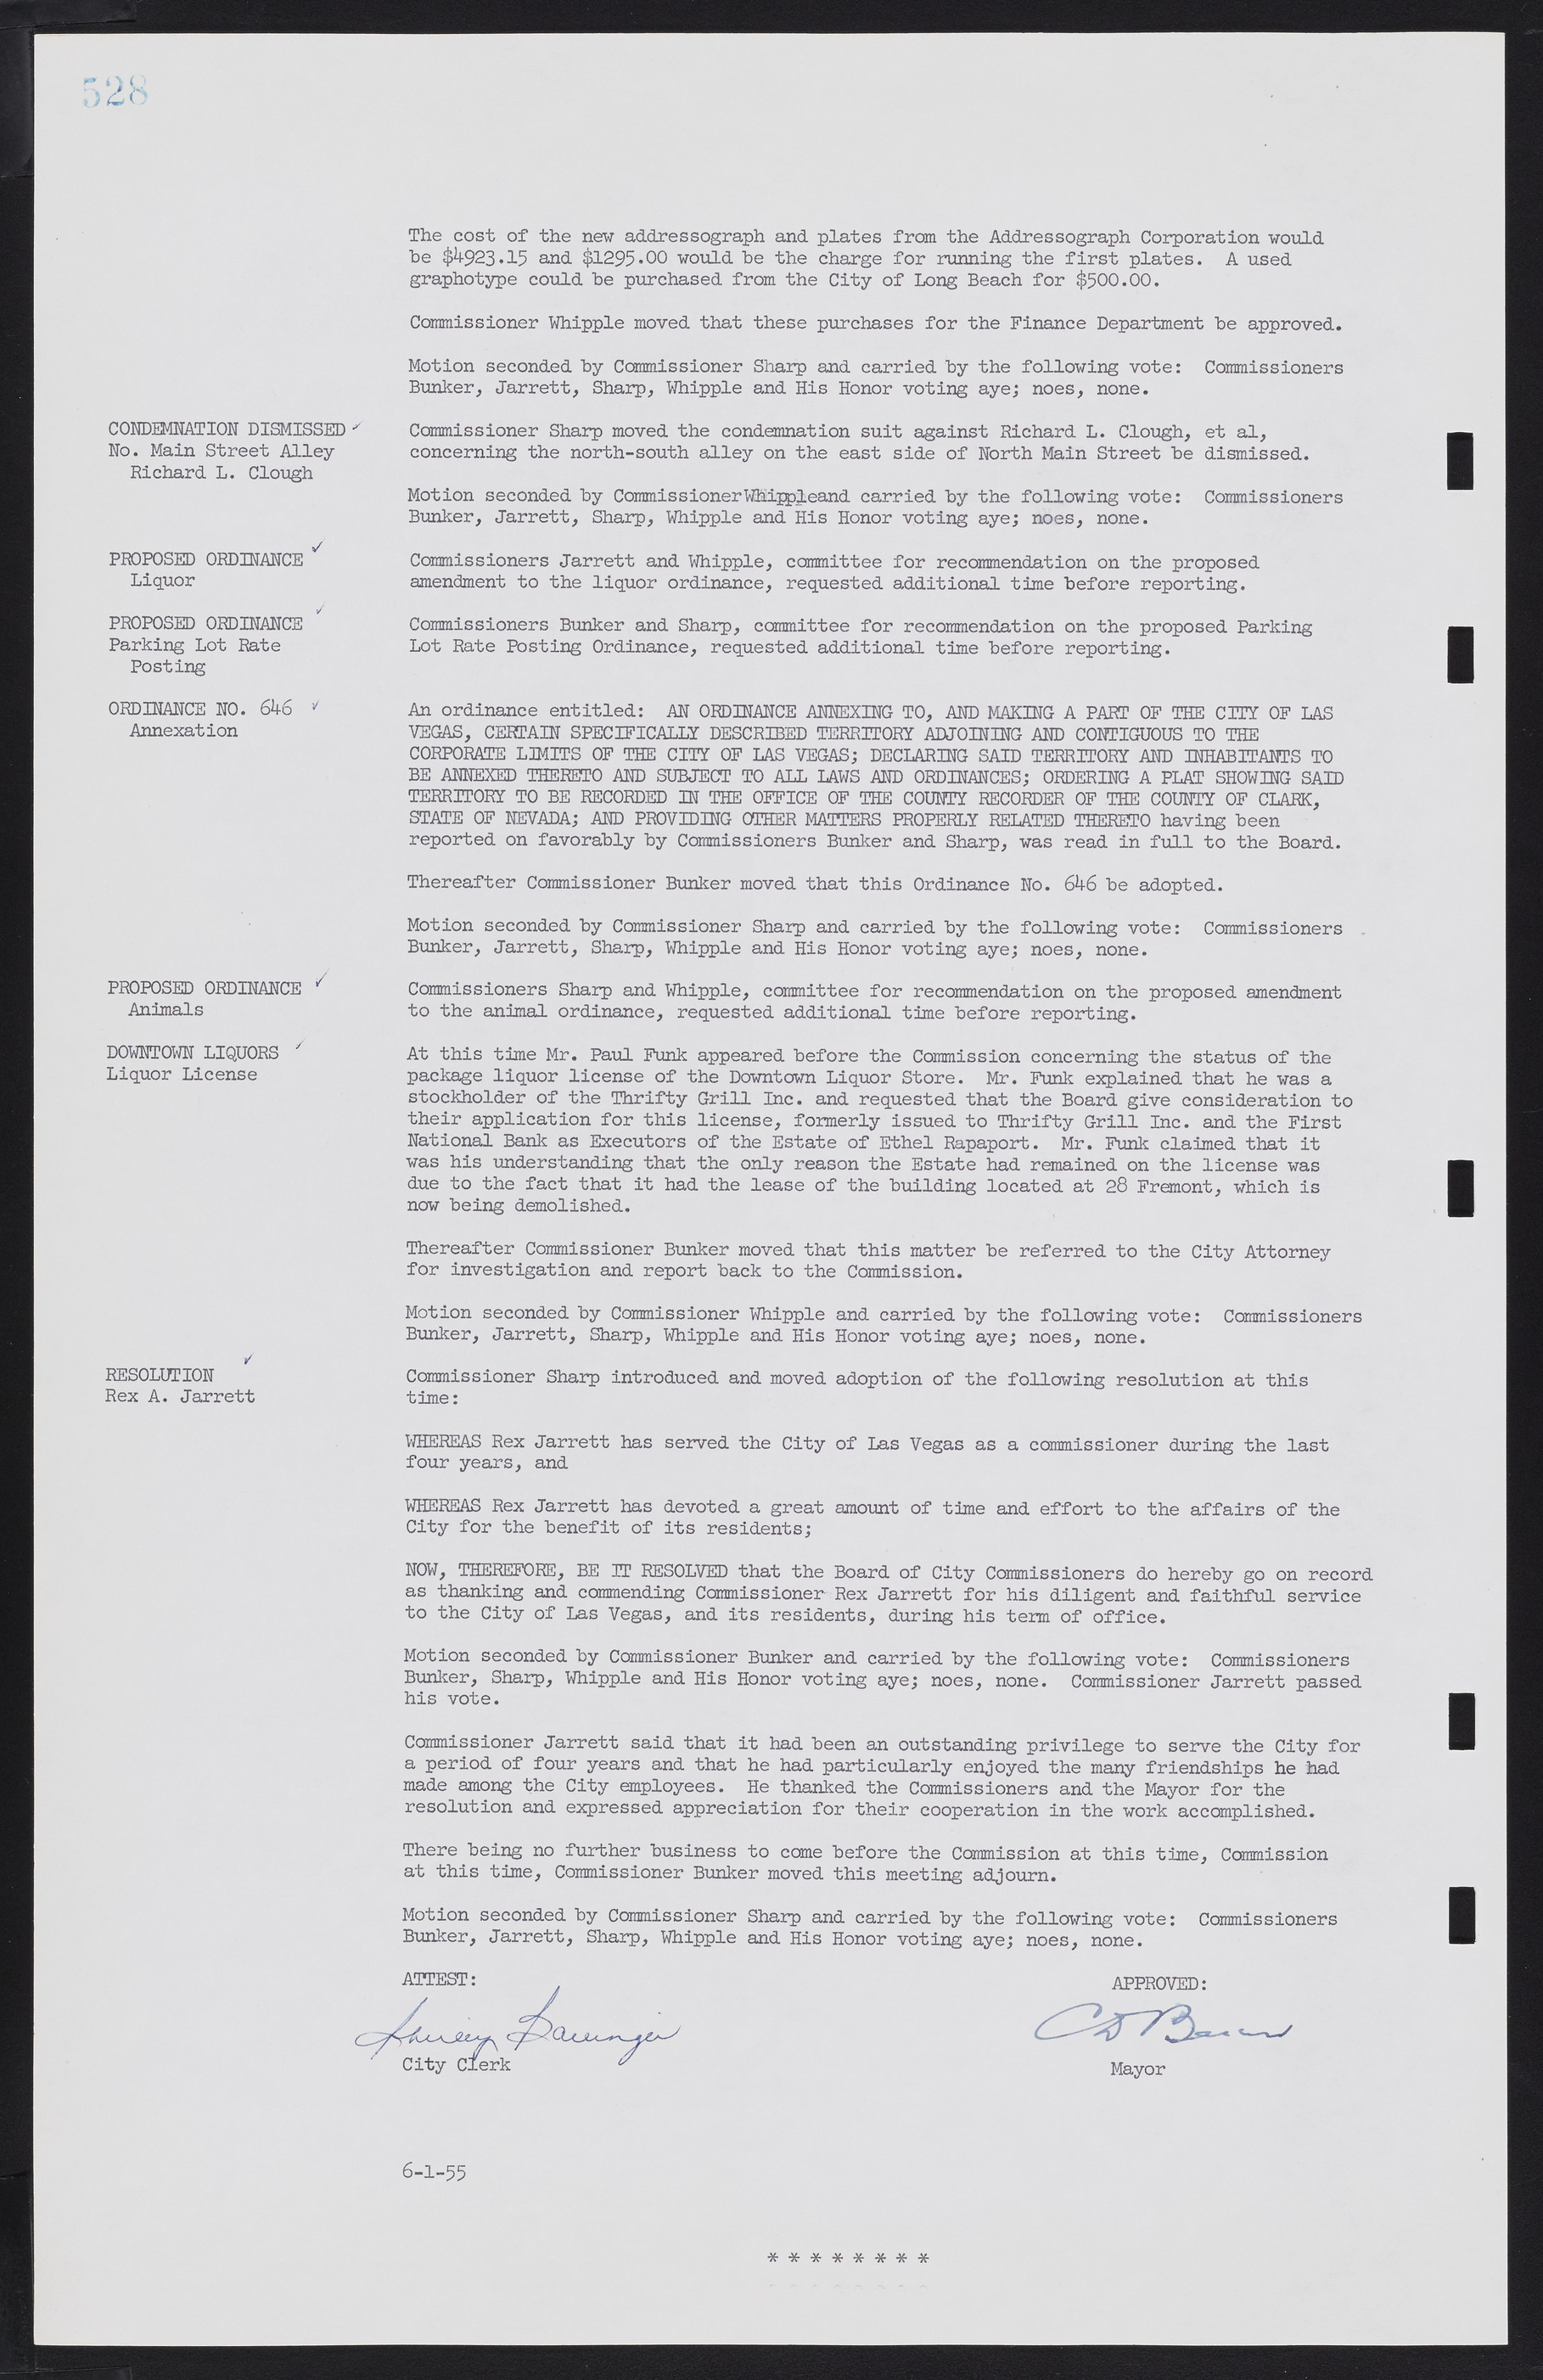 Las Vegas City Commission Minutes, February 17, 1954 to September 21, 1955, lvc000009-534